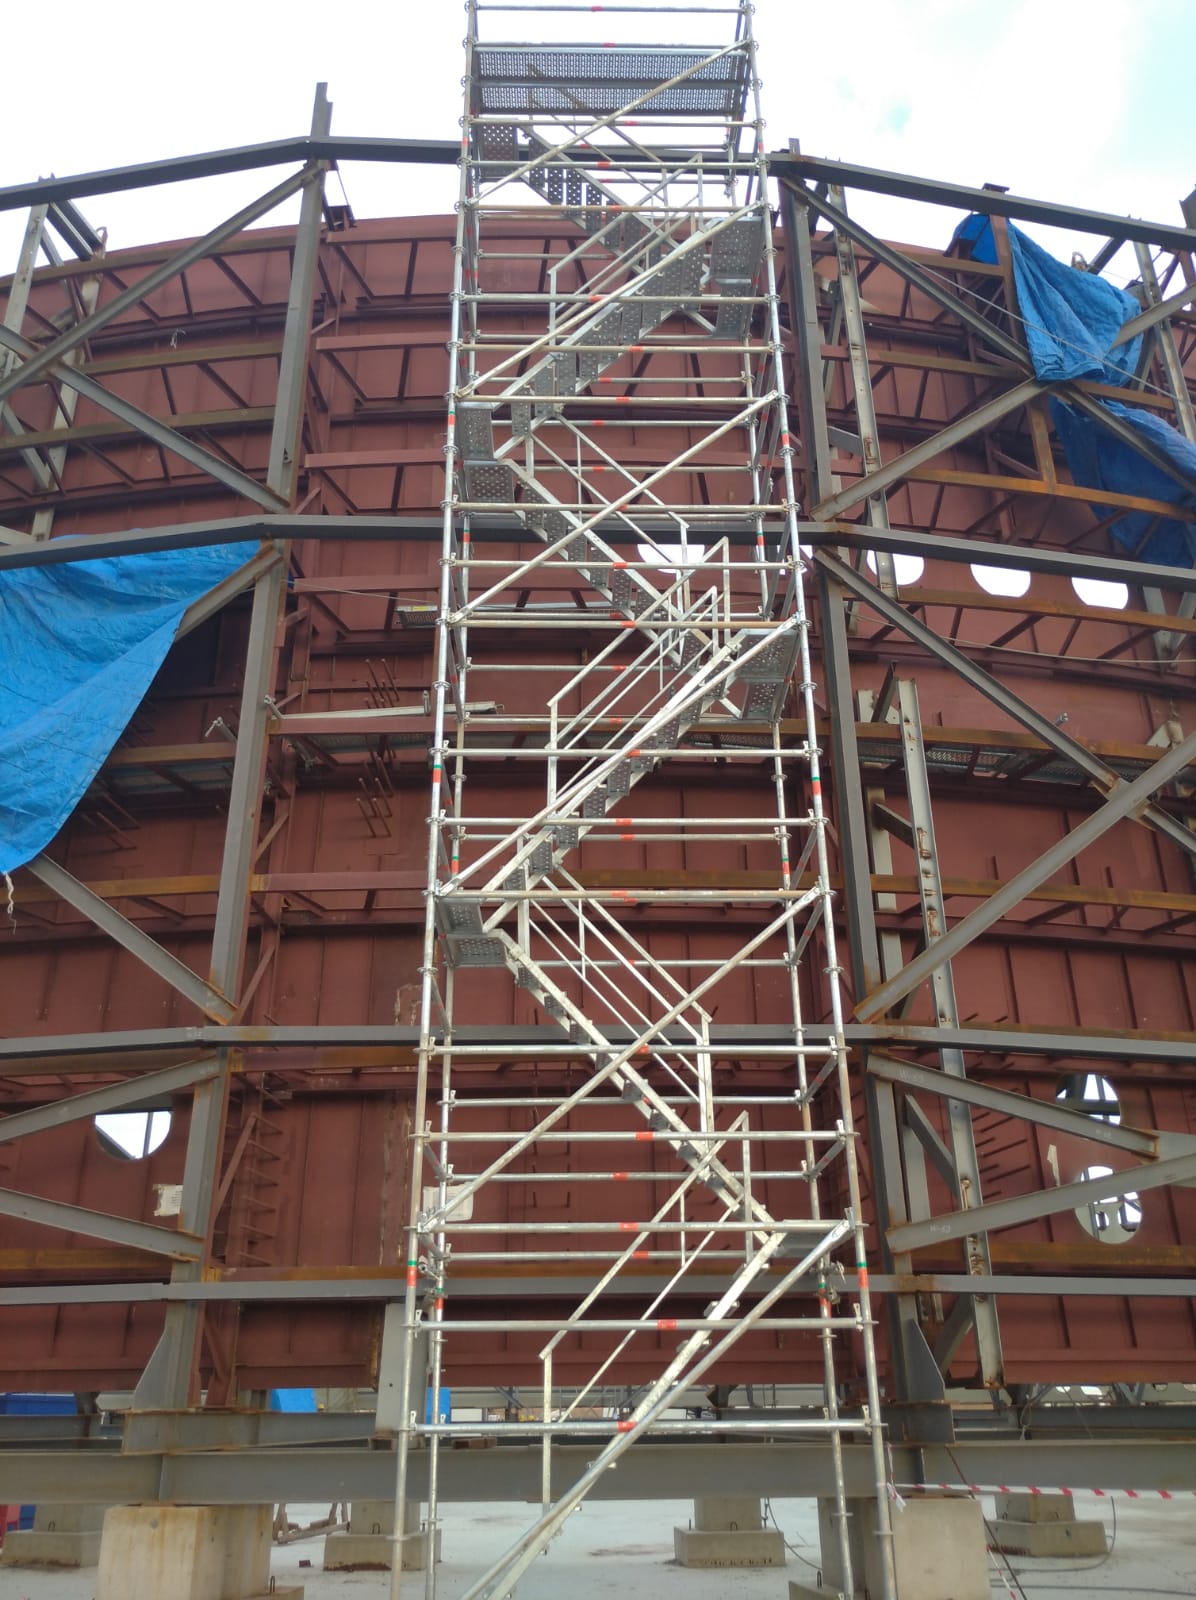 yagmur scaffolding stair tower 03 - STAIR TOWER